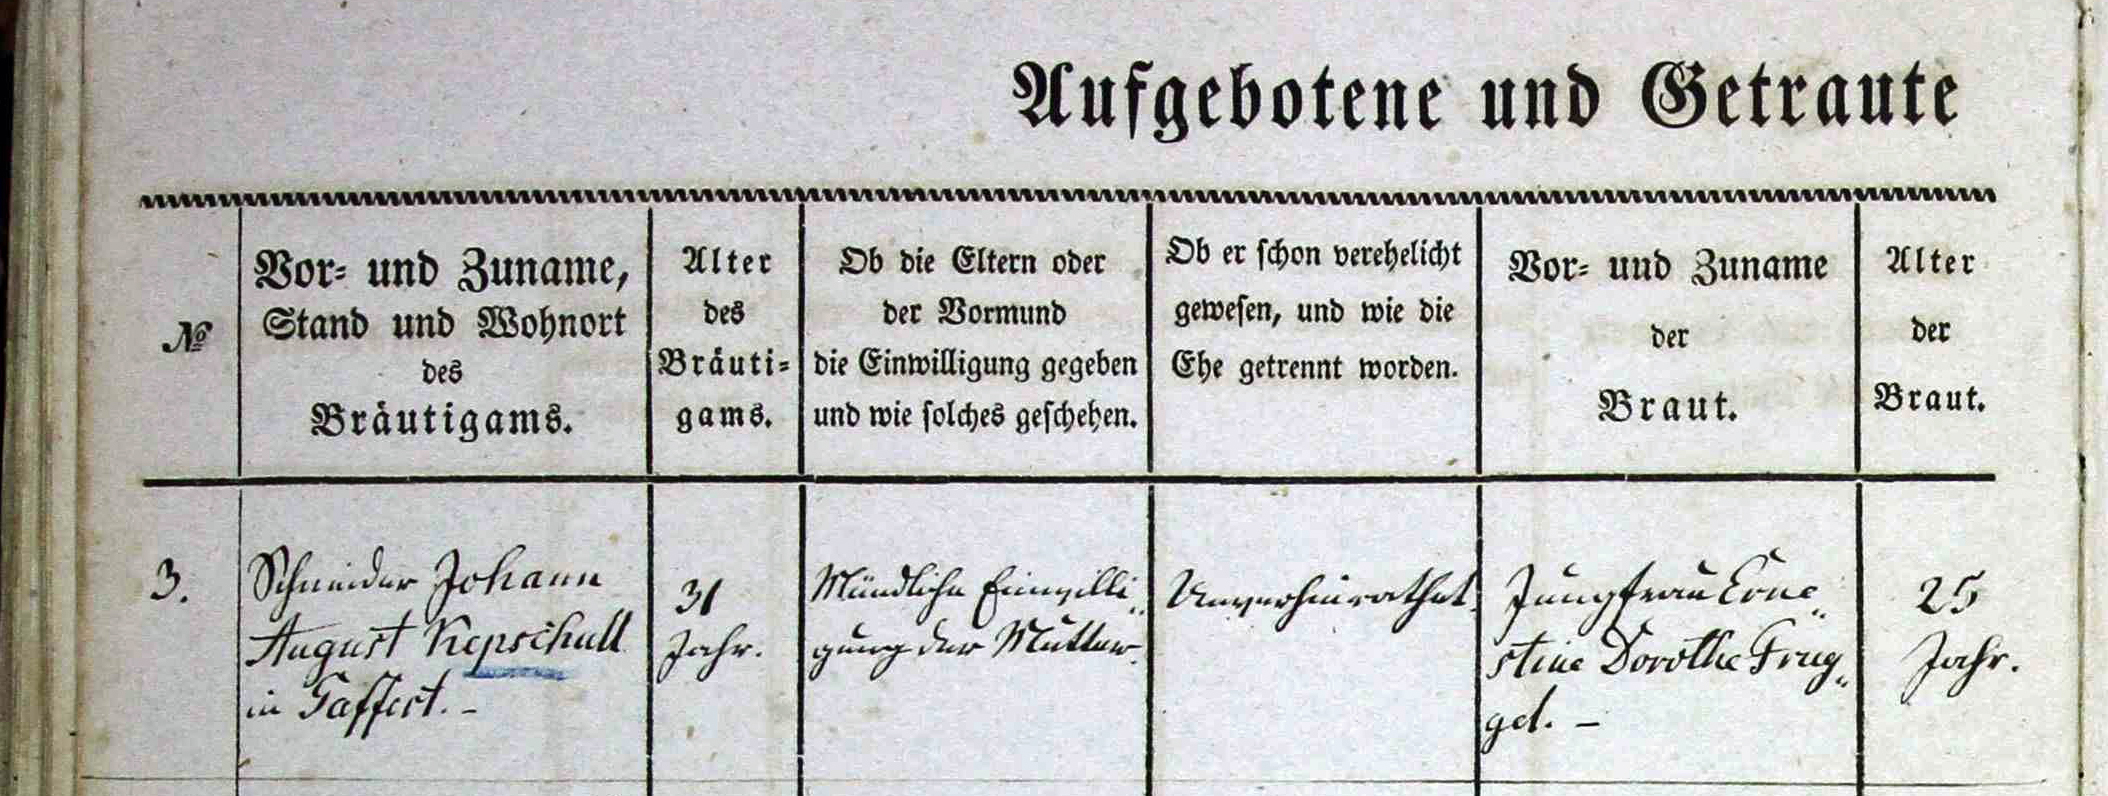 Kebschull-Fruggel 1857 marriage